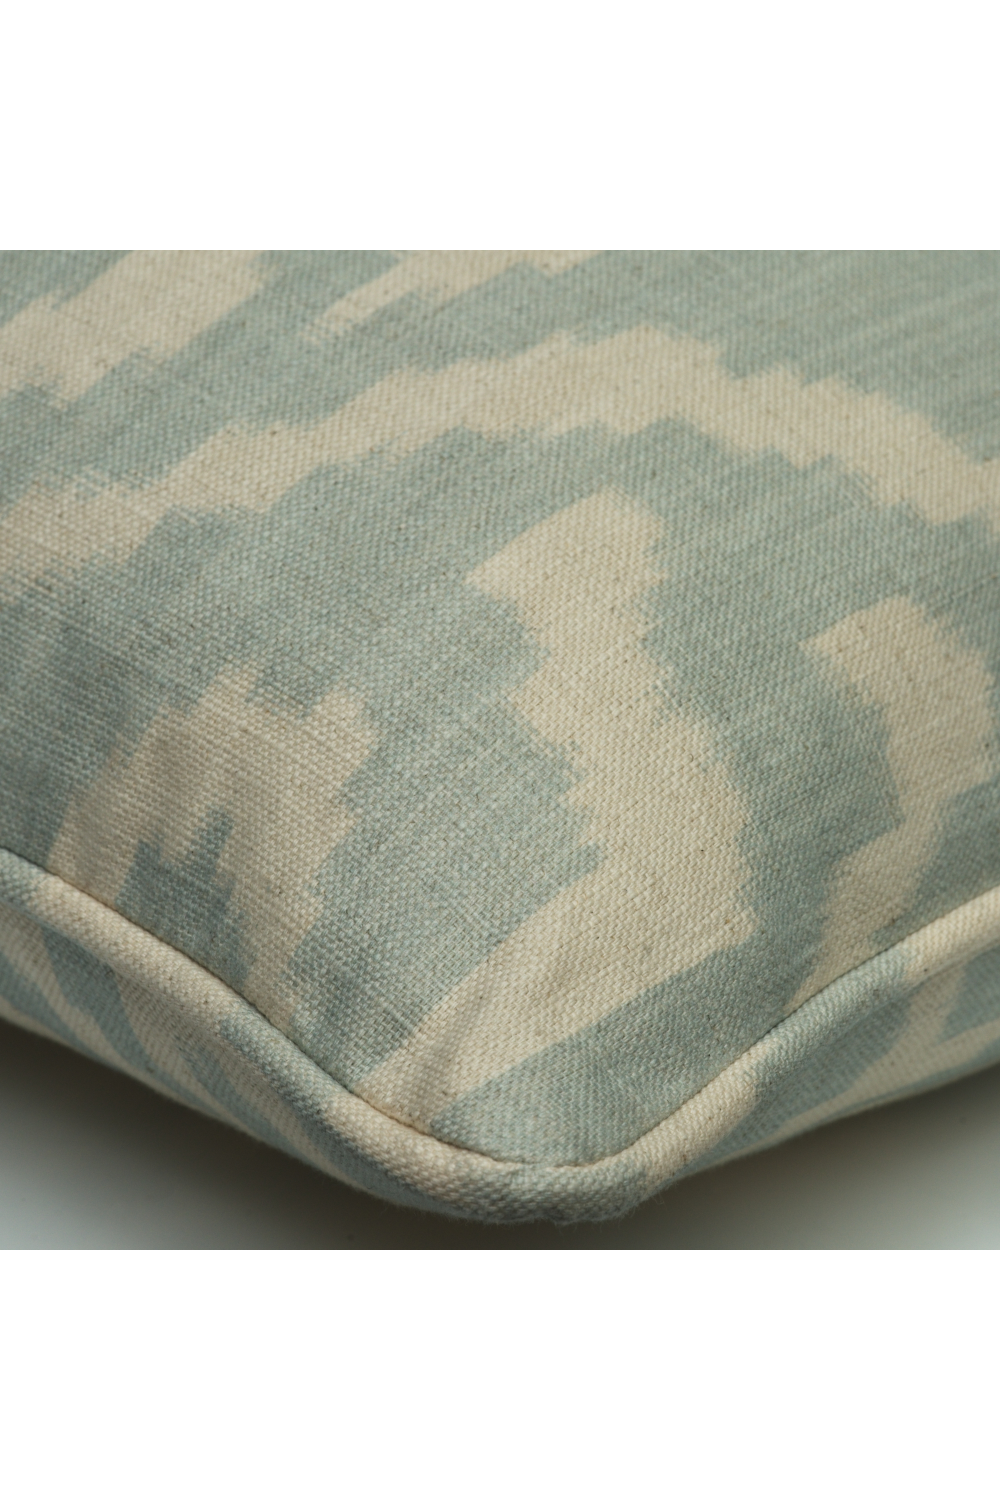 Ikat Patterned Pillow | Andrew Martin Otter | Oroa.com